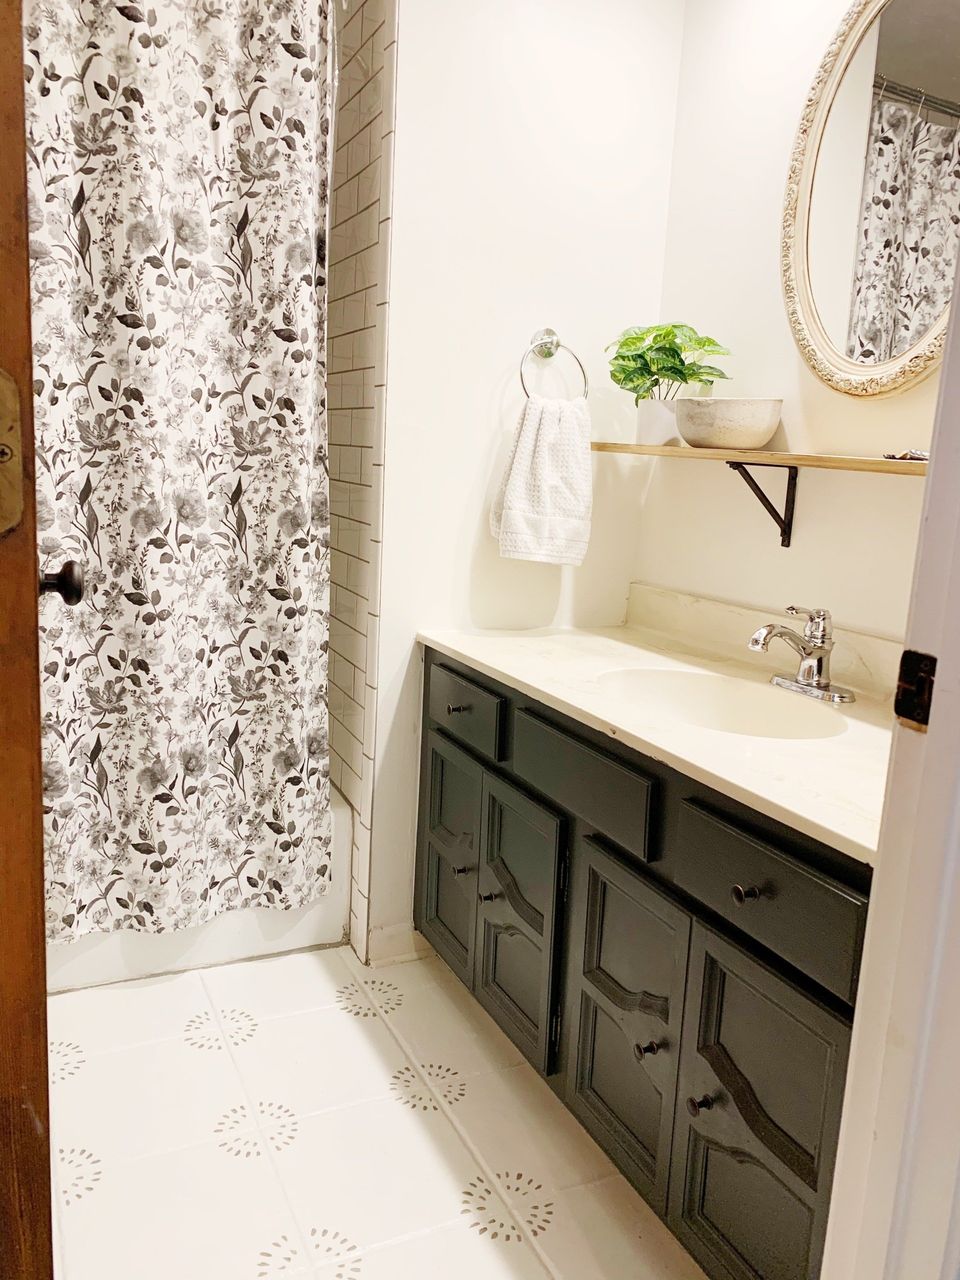 How To Paint Ceramic Tile In Bathroom Home Design Ideas